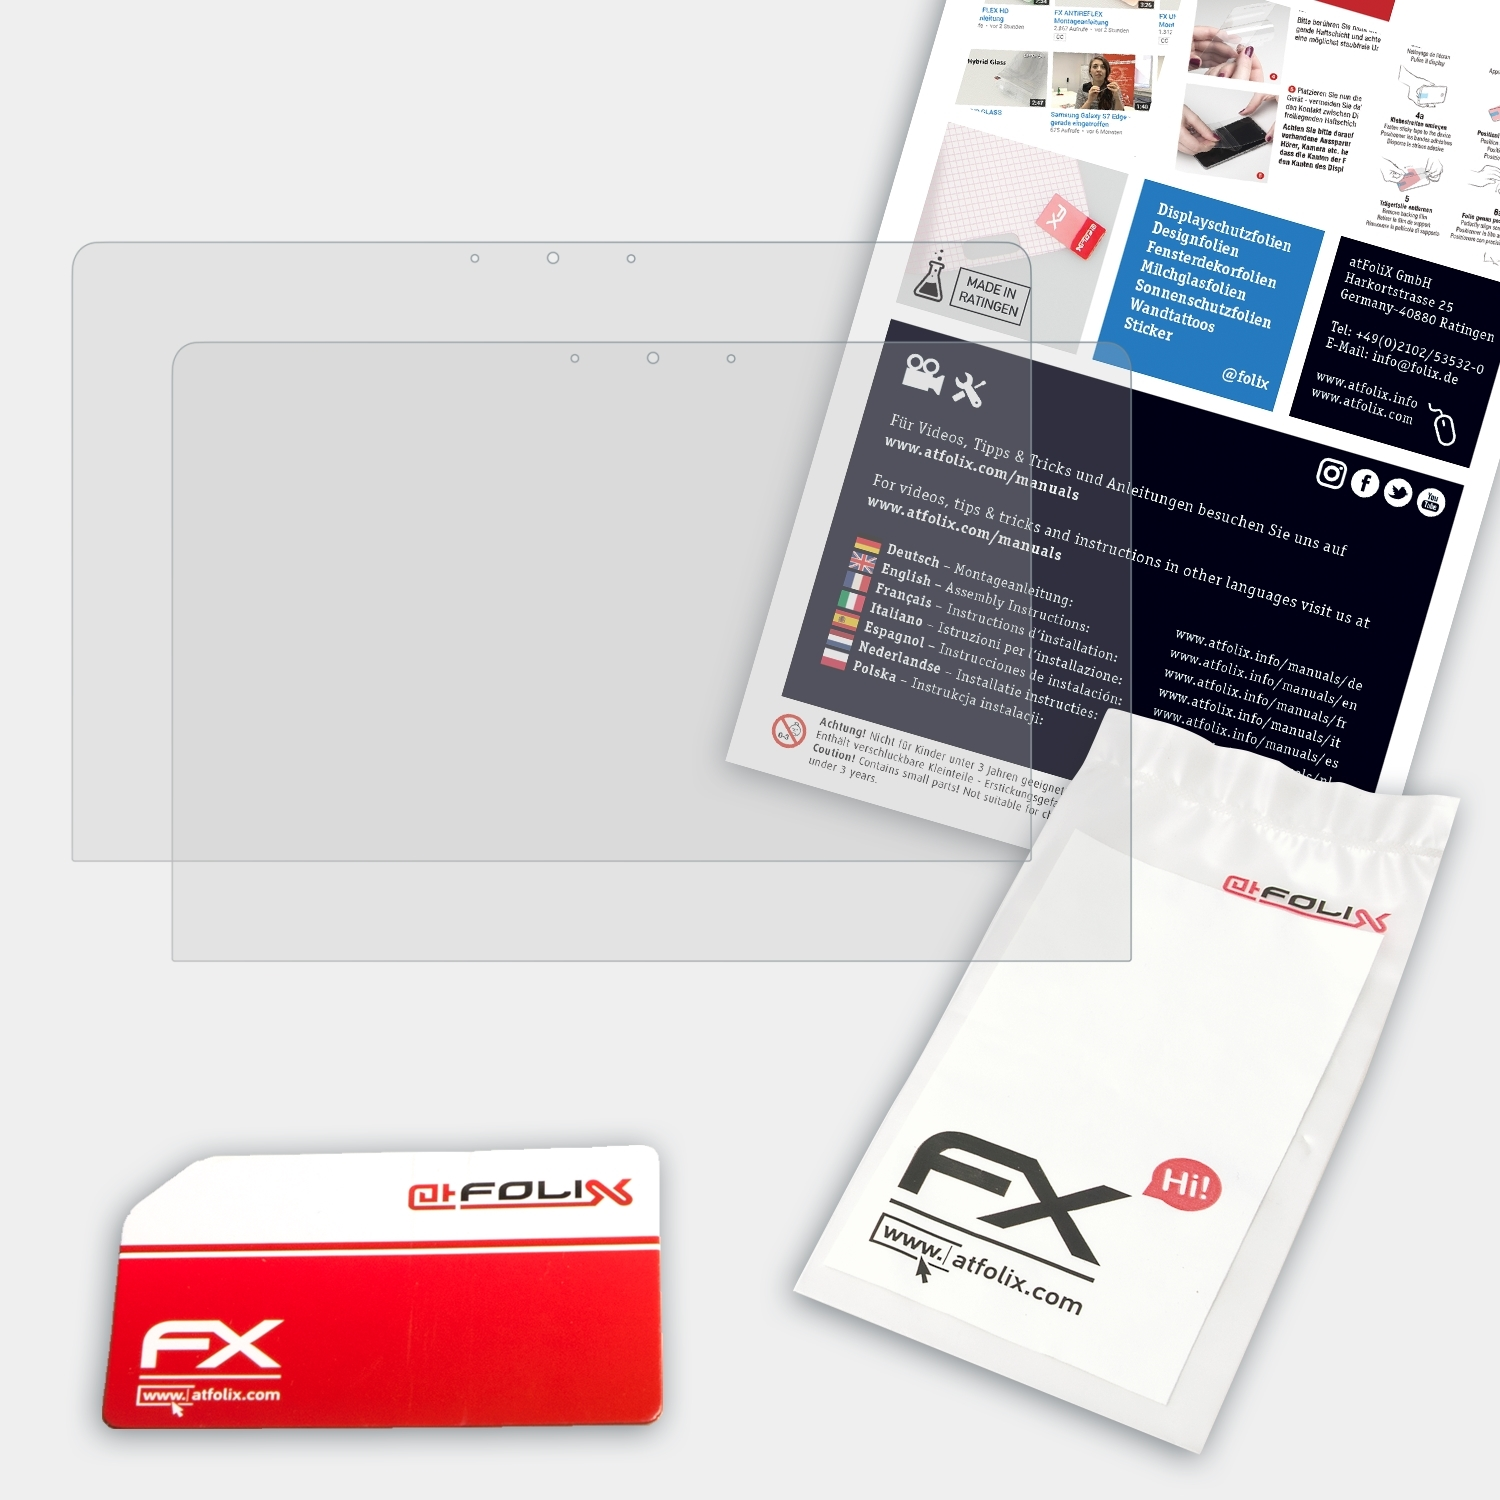 ATFOLIX 2x FX-Antireflex Displayschutz(für Asus (UX370UA)) ZenBook S Flip